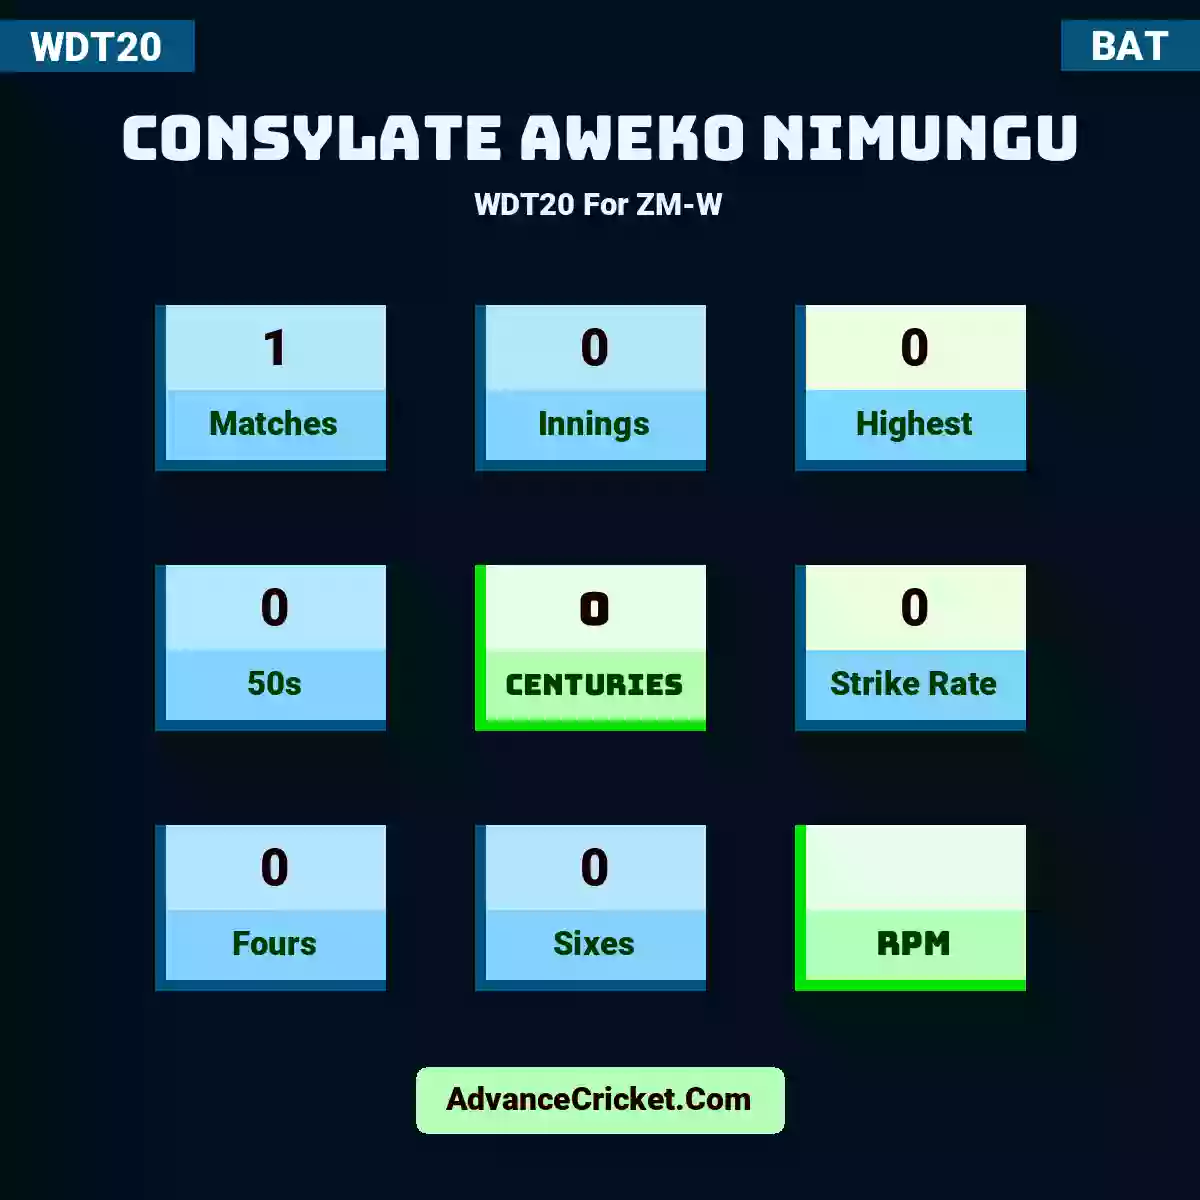 Consylate Aweko Nimungu WDT20  For ZM-W, Consylate Aweko Nimungu played 1 matches, scored 0 runs as highest, 0 half-centuries, and 0 centuries, with a strike rate of 0. C.Aweko.Nimungu hit 0 fours and 0 sixes.